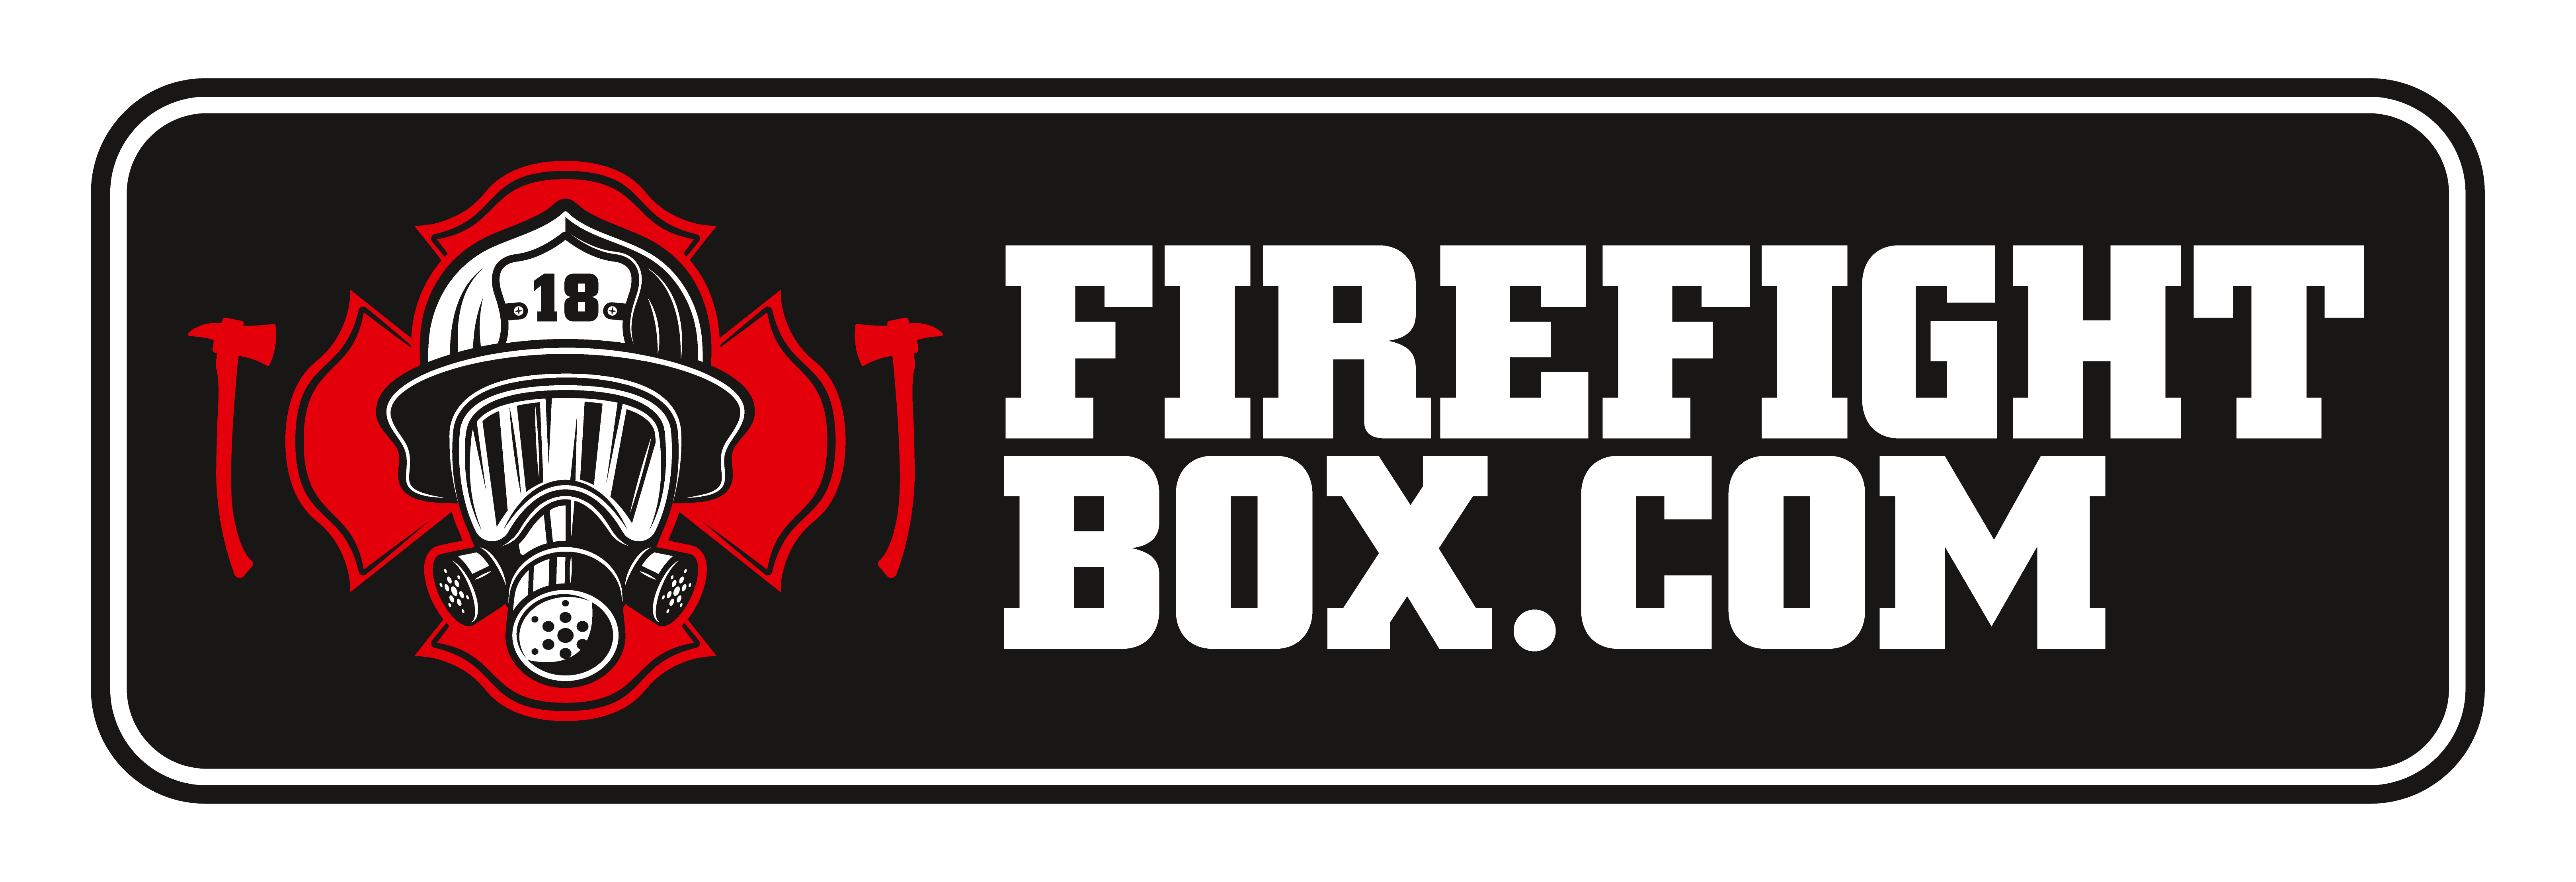 Firefightbox